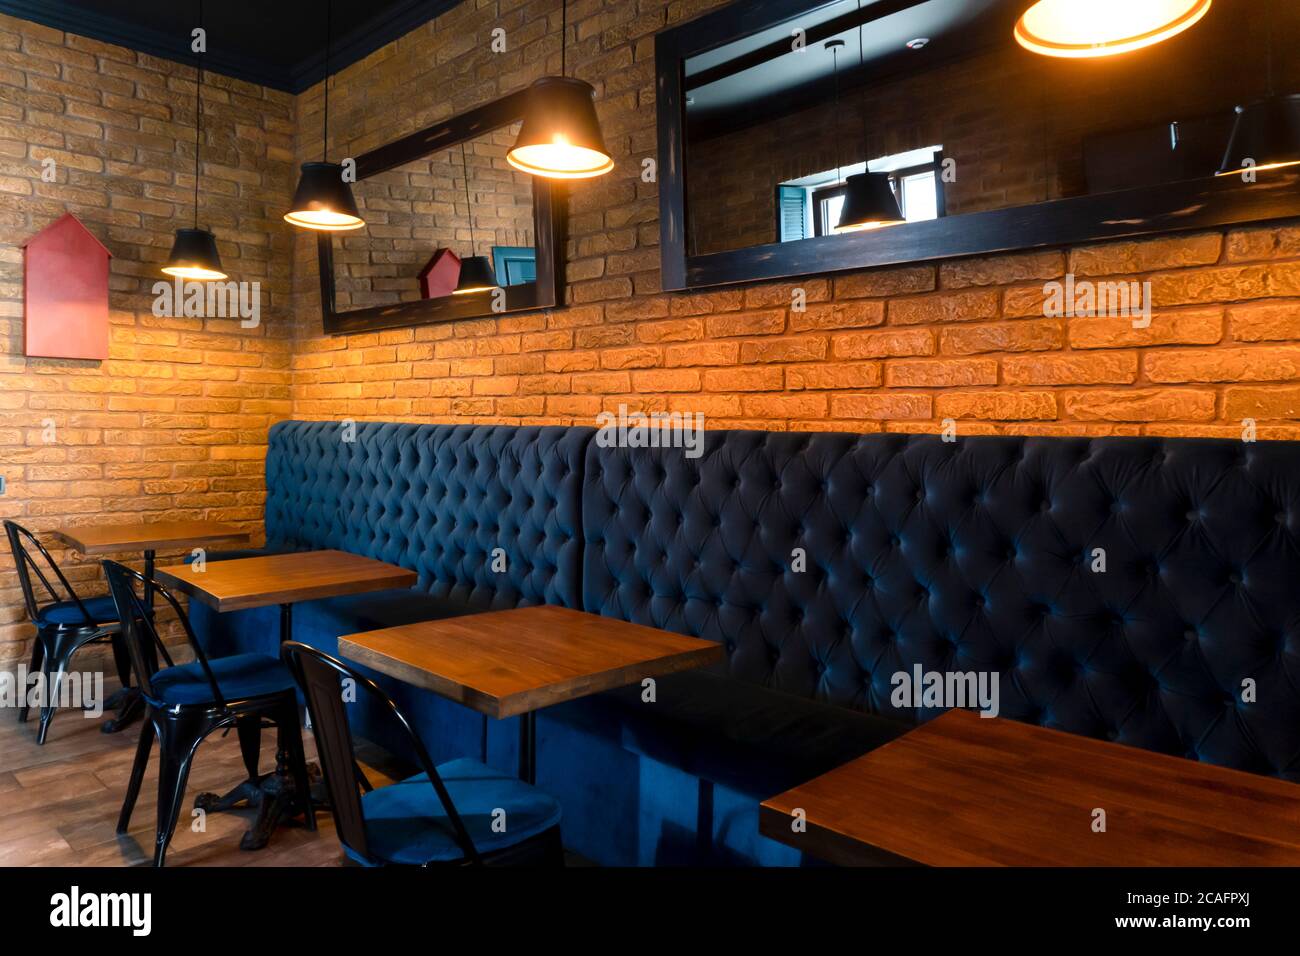 Small dining tables at restaurant, modern loft design, brick wall behind, lamps. Stock Photo